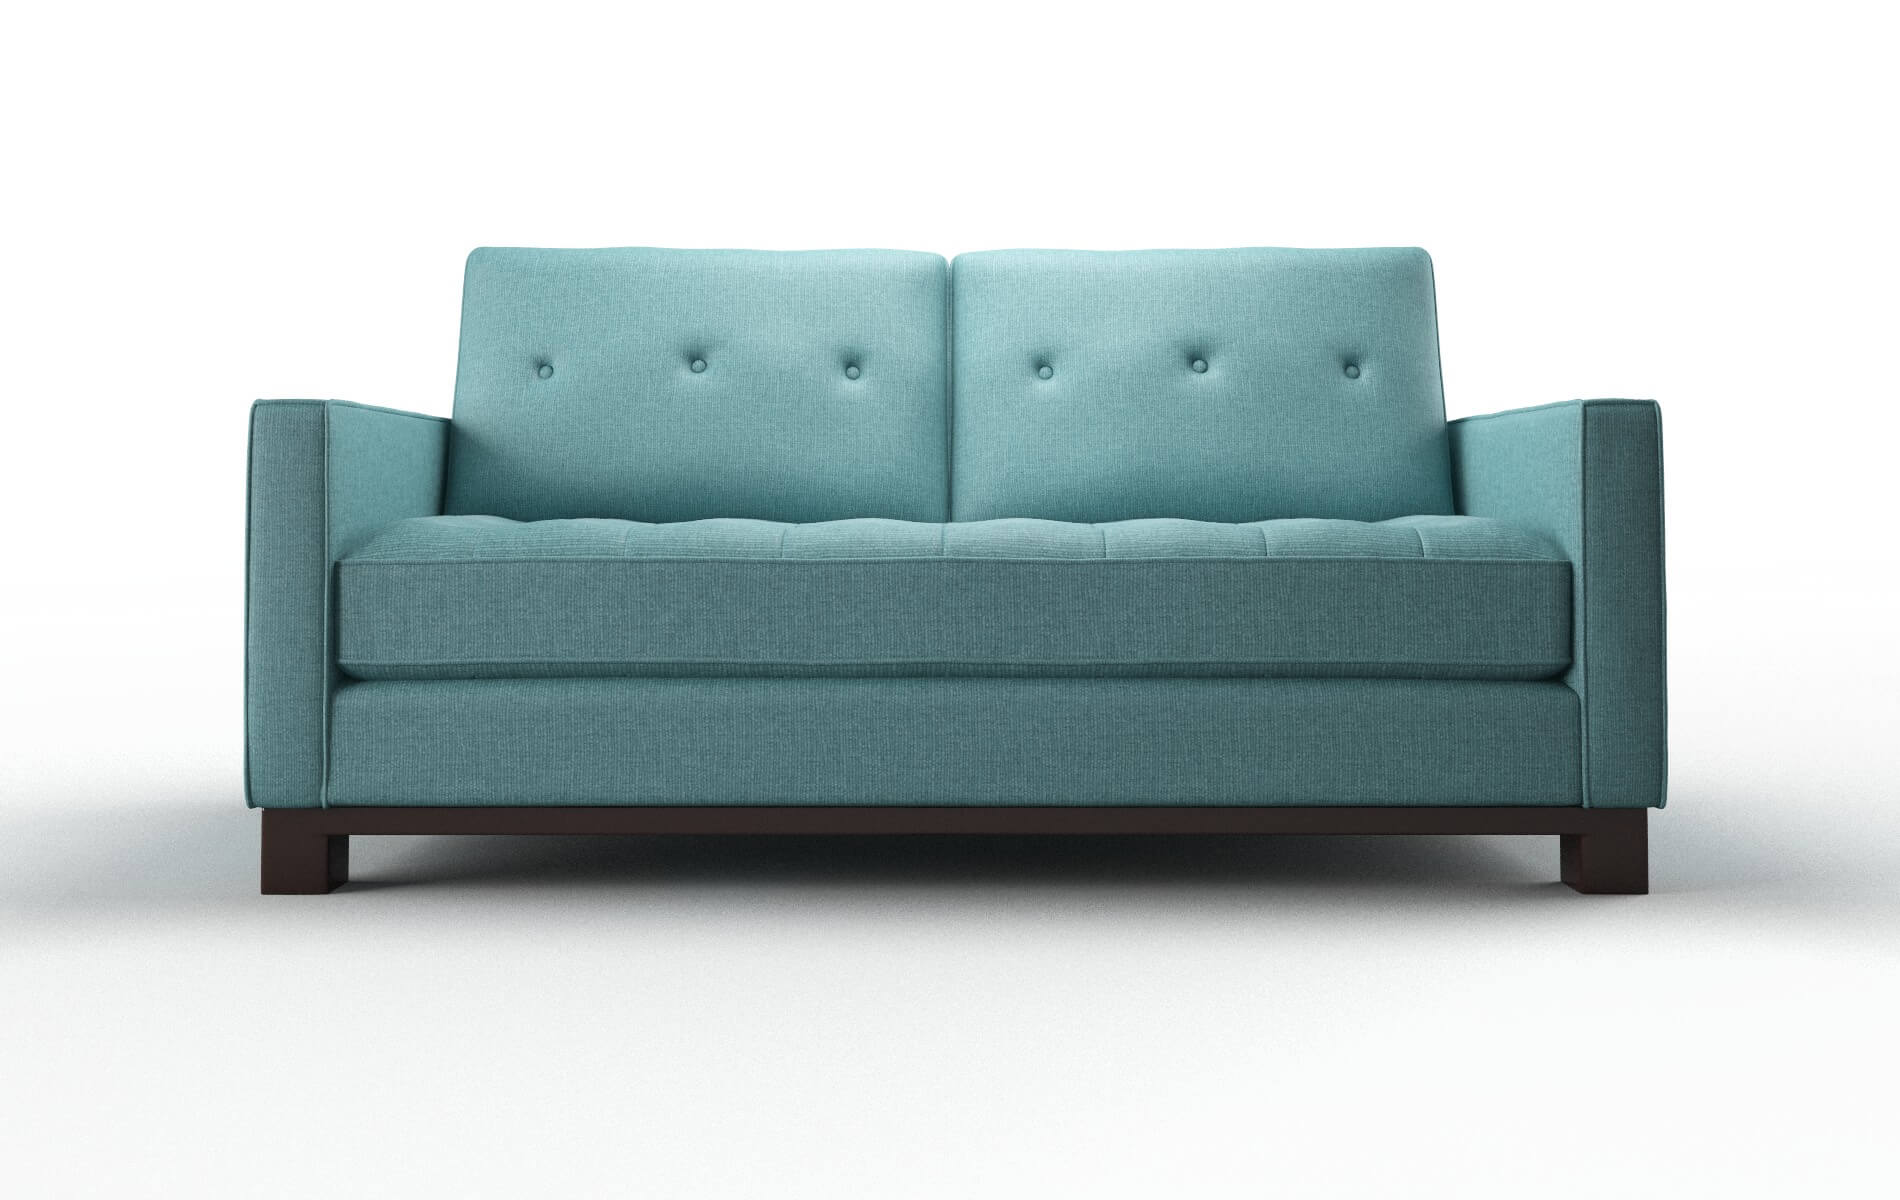 Syros Parker Turquoise Sofa espresso legs